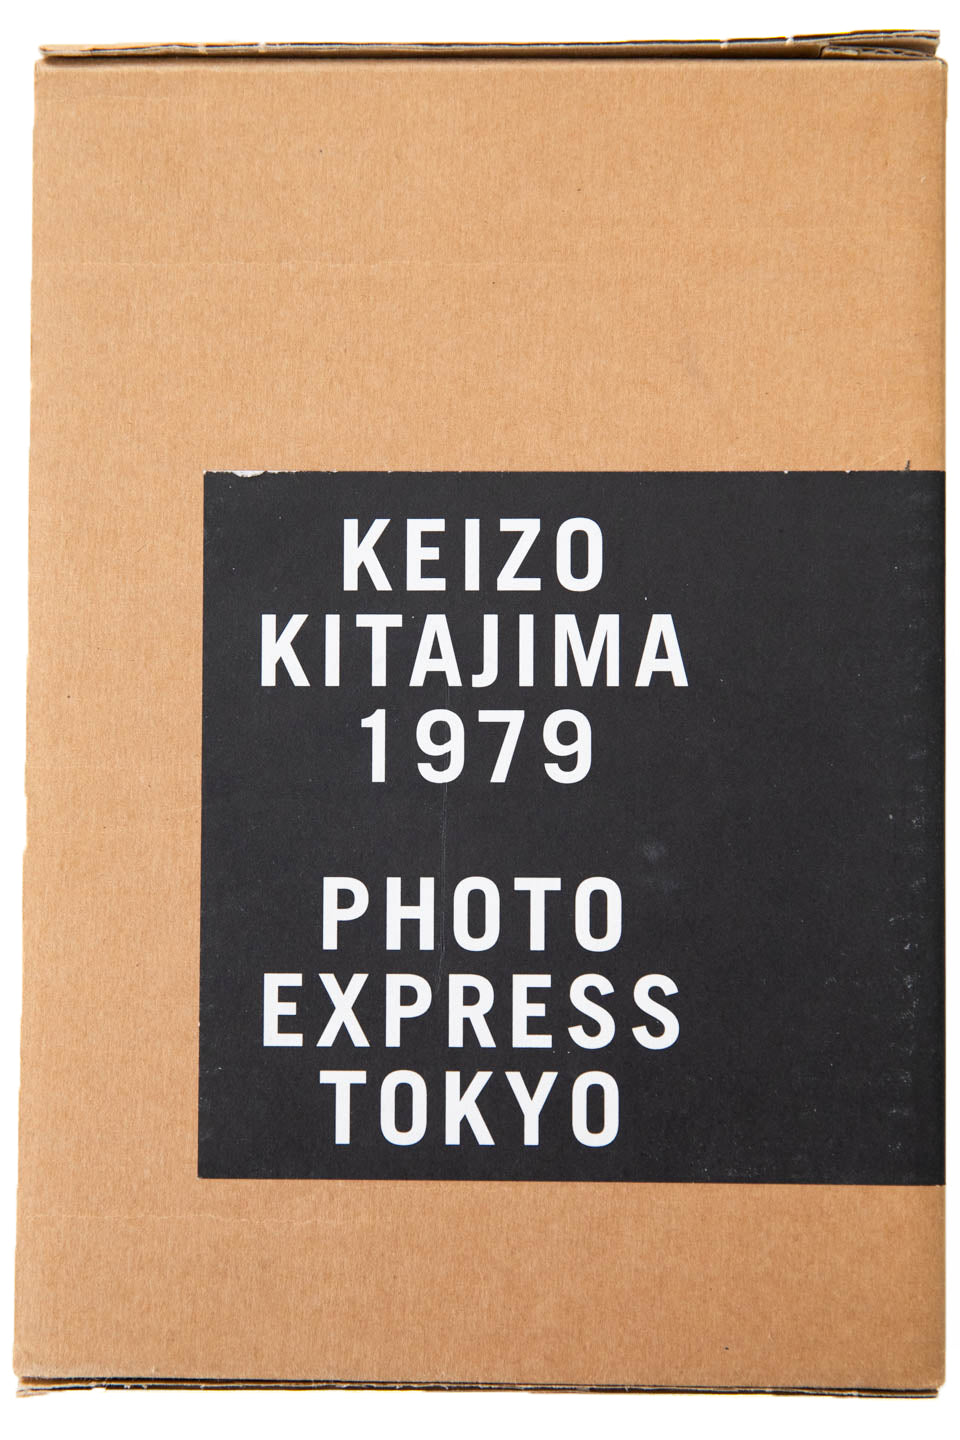 1979 Photo Express Tokyo - Keizo KITAJIMA